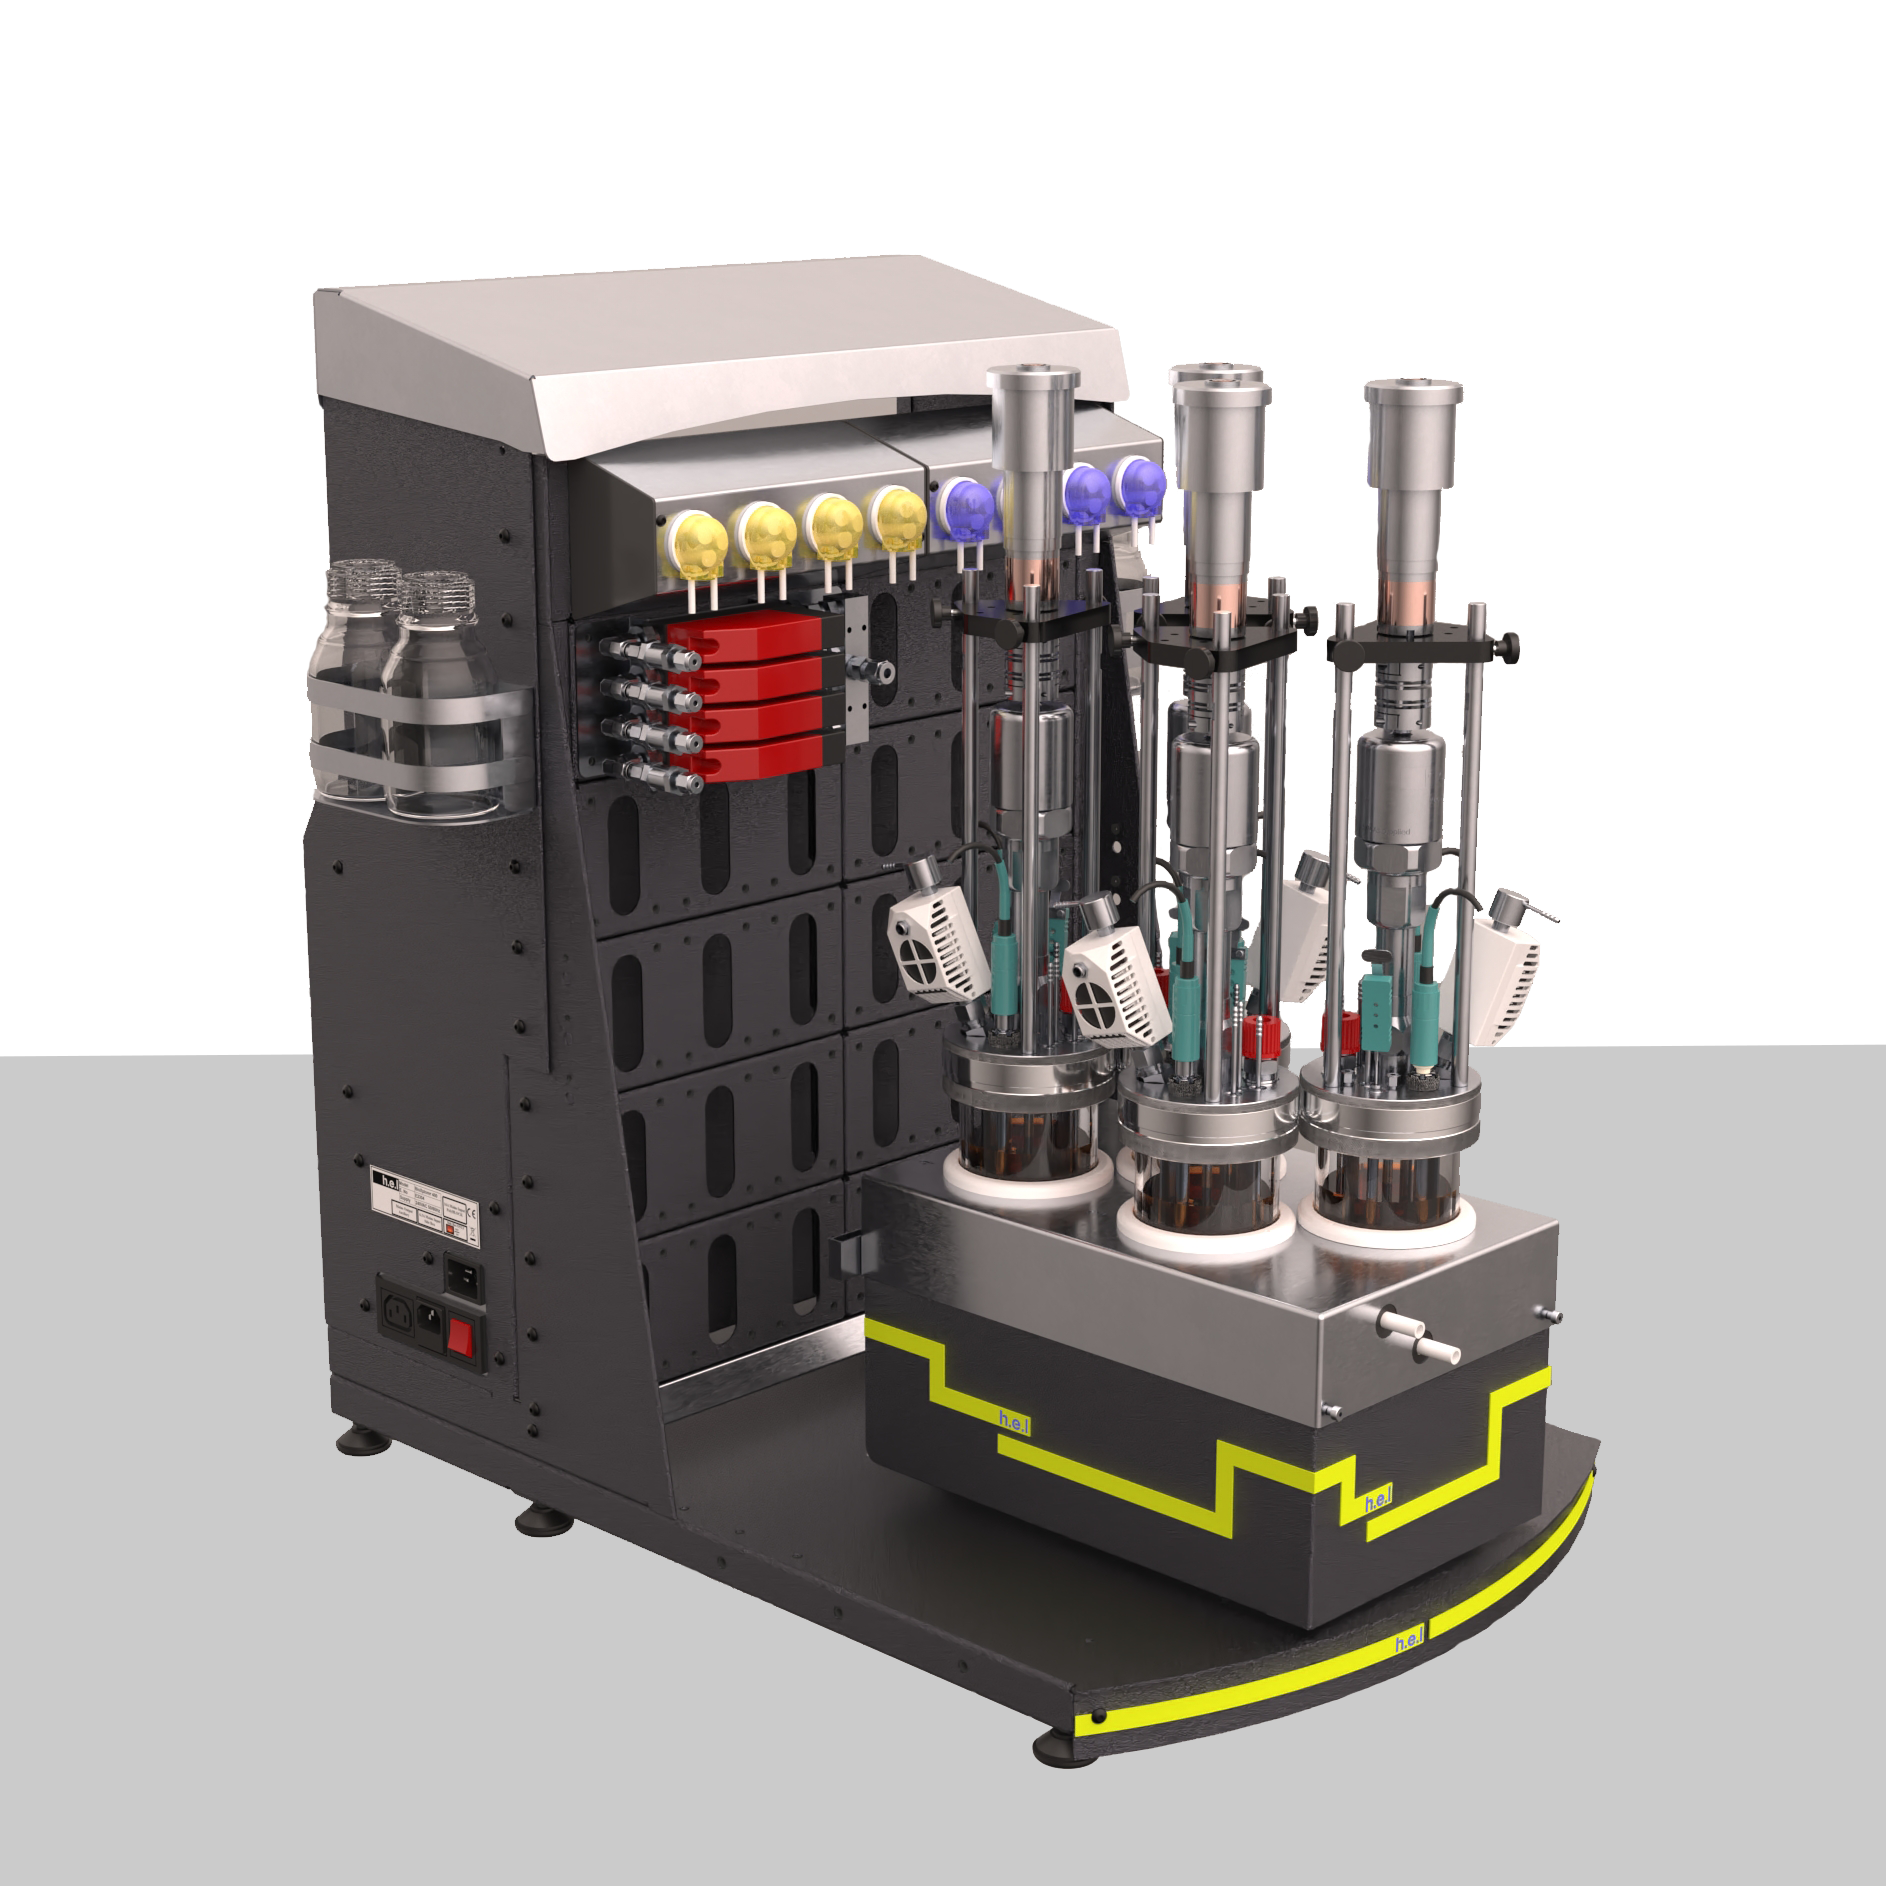 BioXplorer 400: Bench-top, 4 bioreactor, automated parallel biotechnology platform